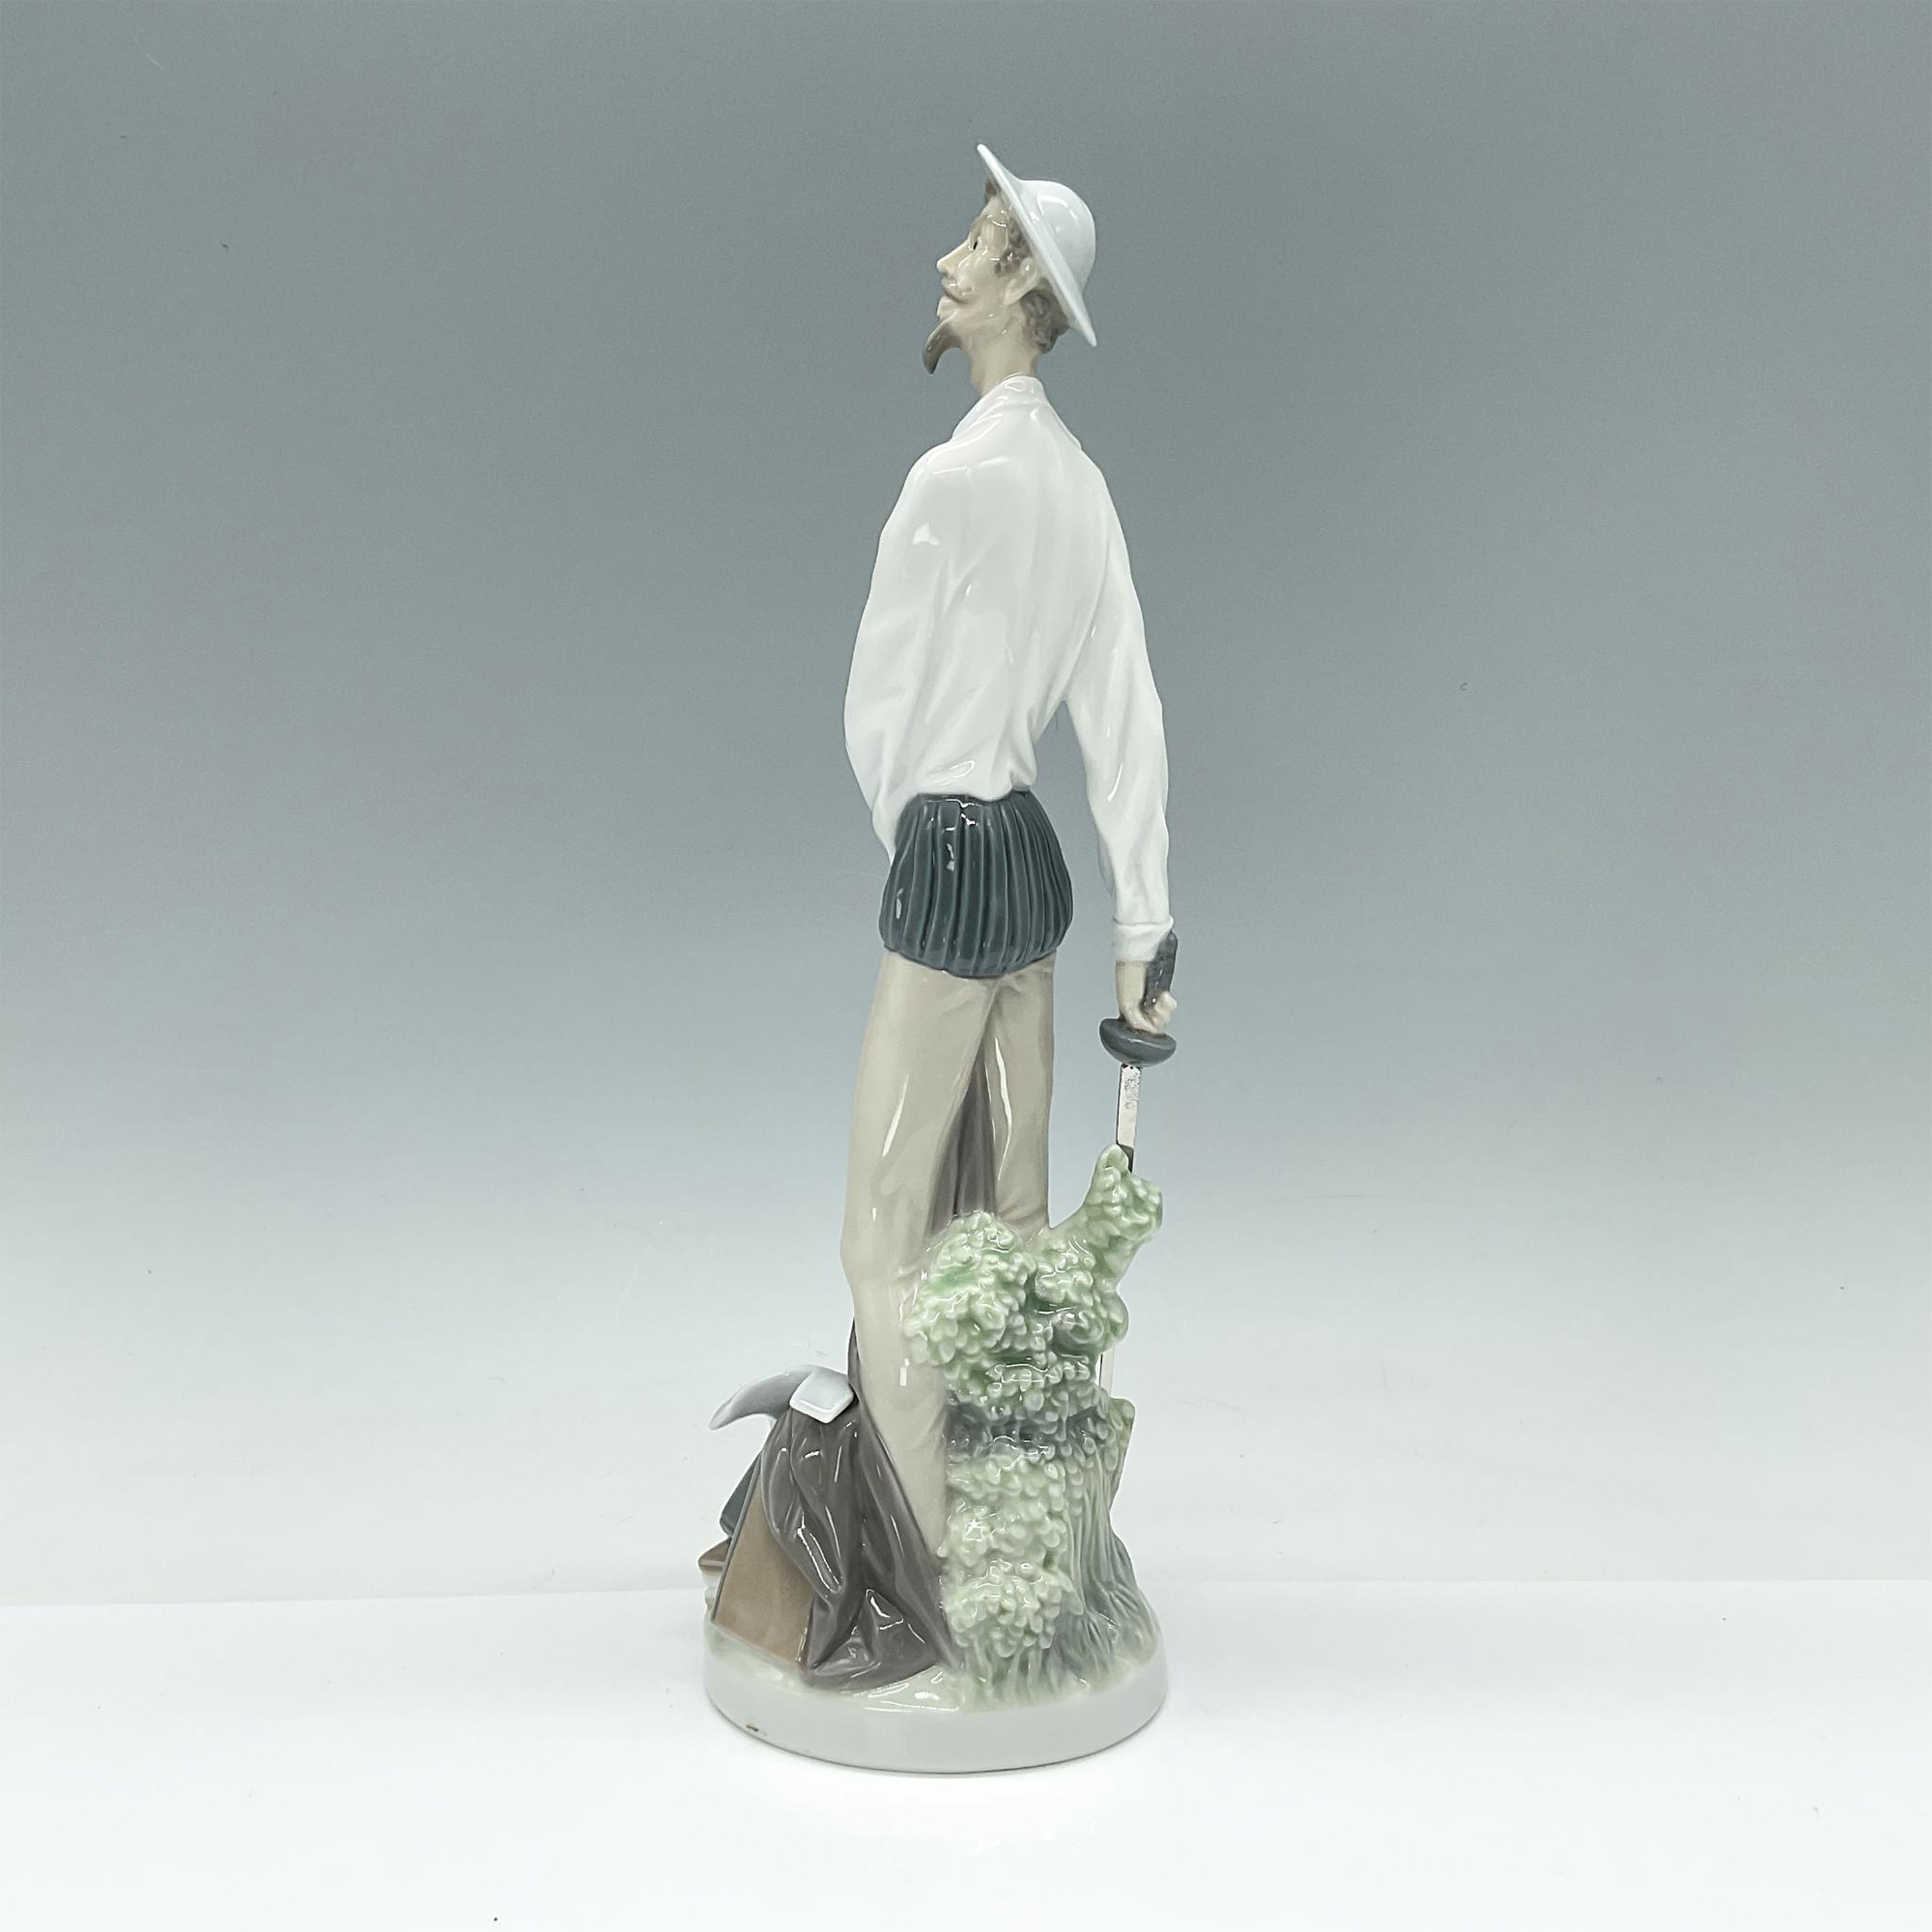 Don Quixote 1002265 - Lladro Porcelain Figurine - Image 2 of 3